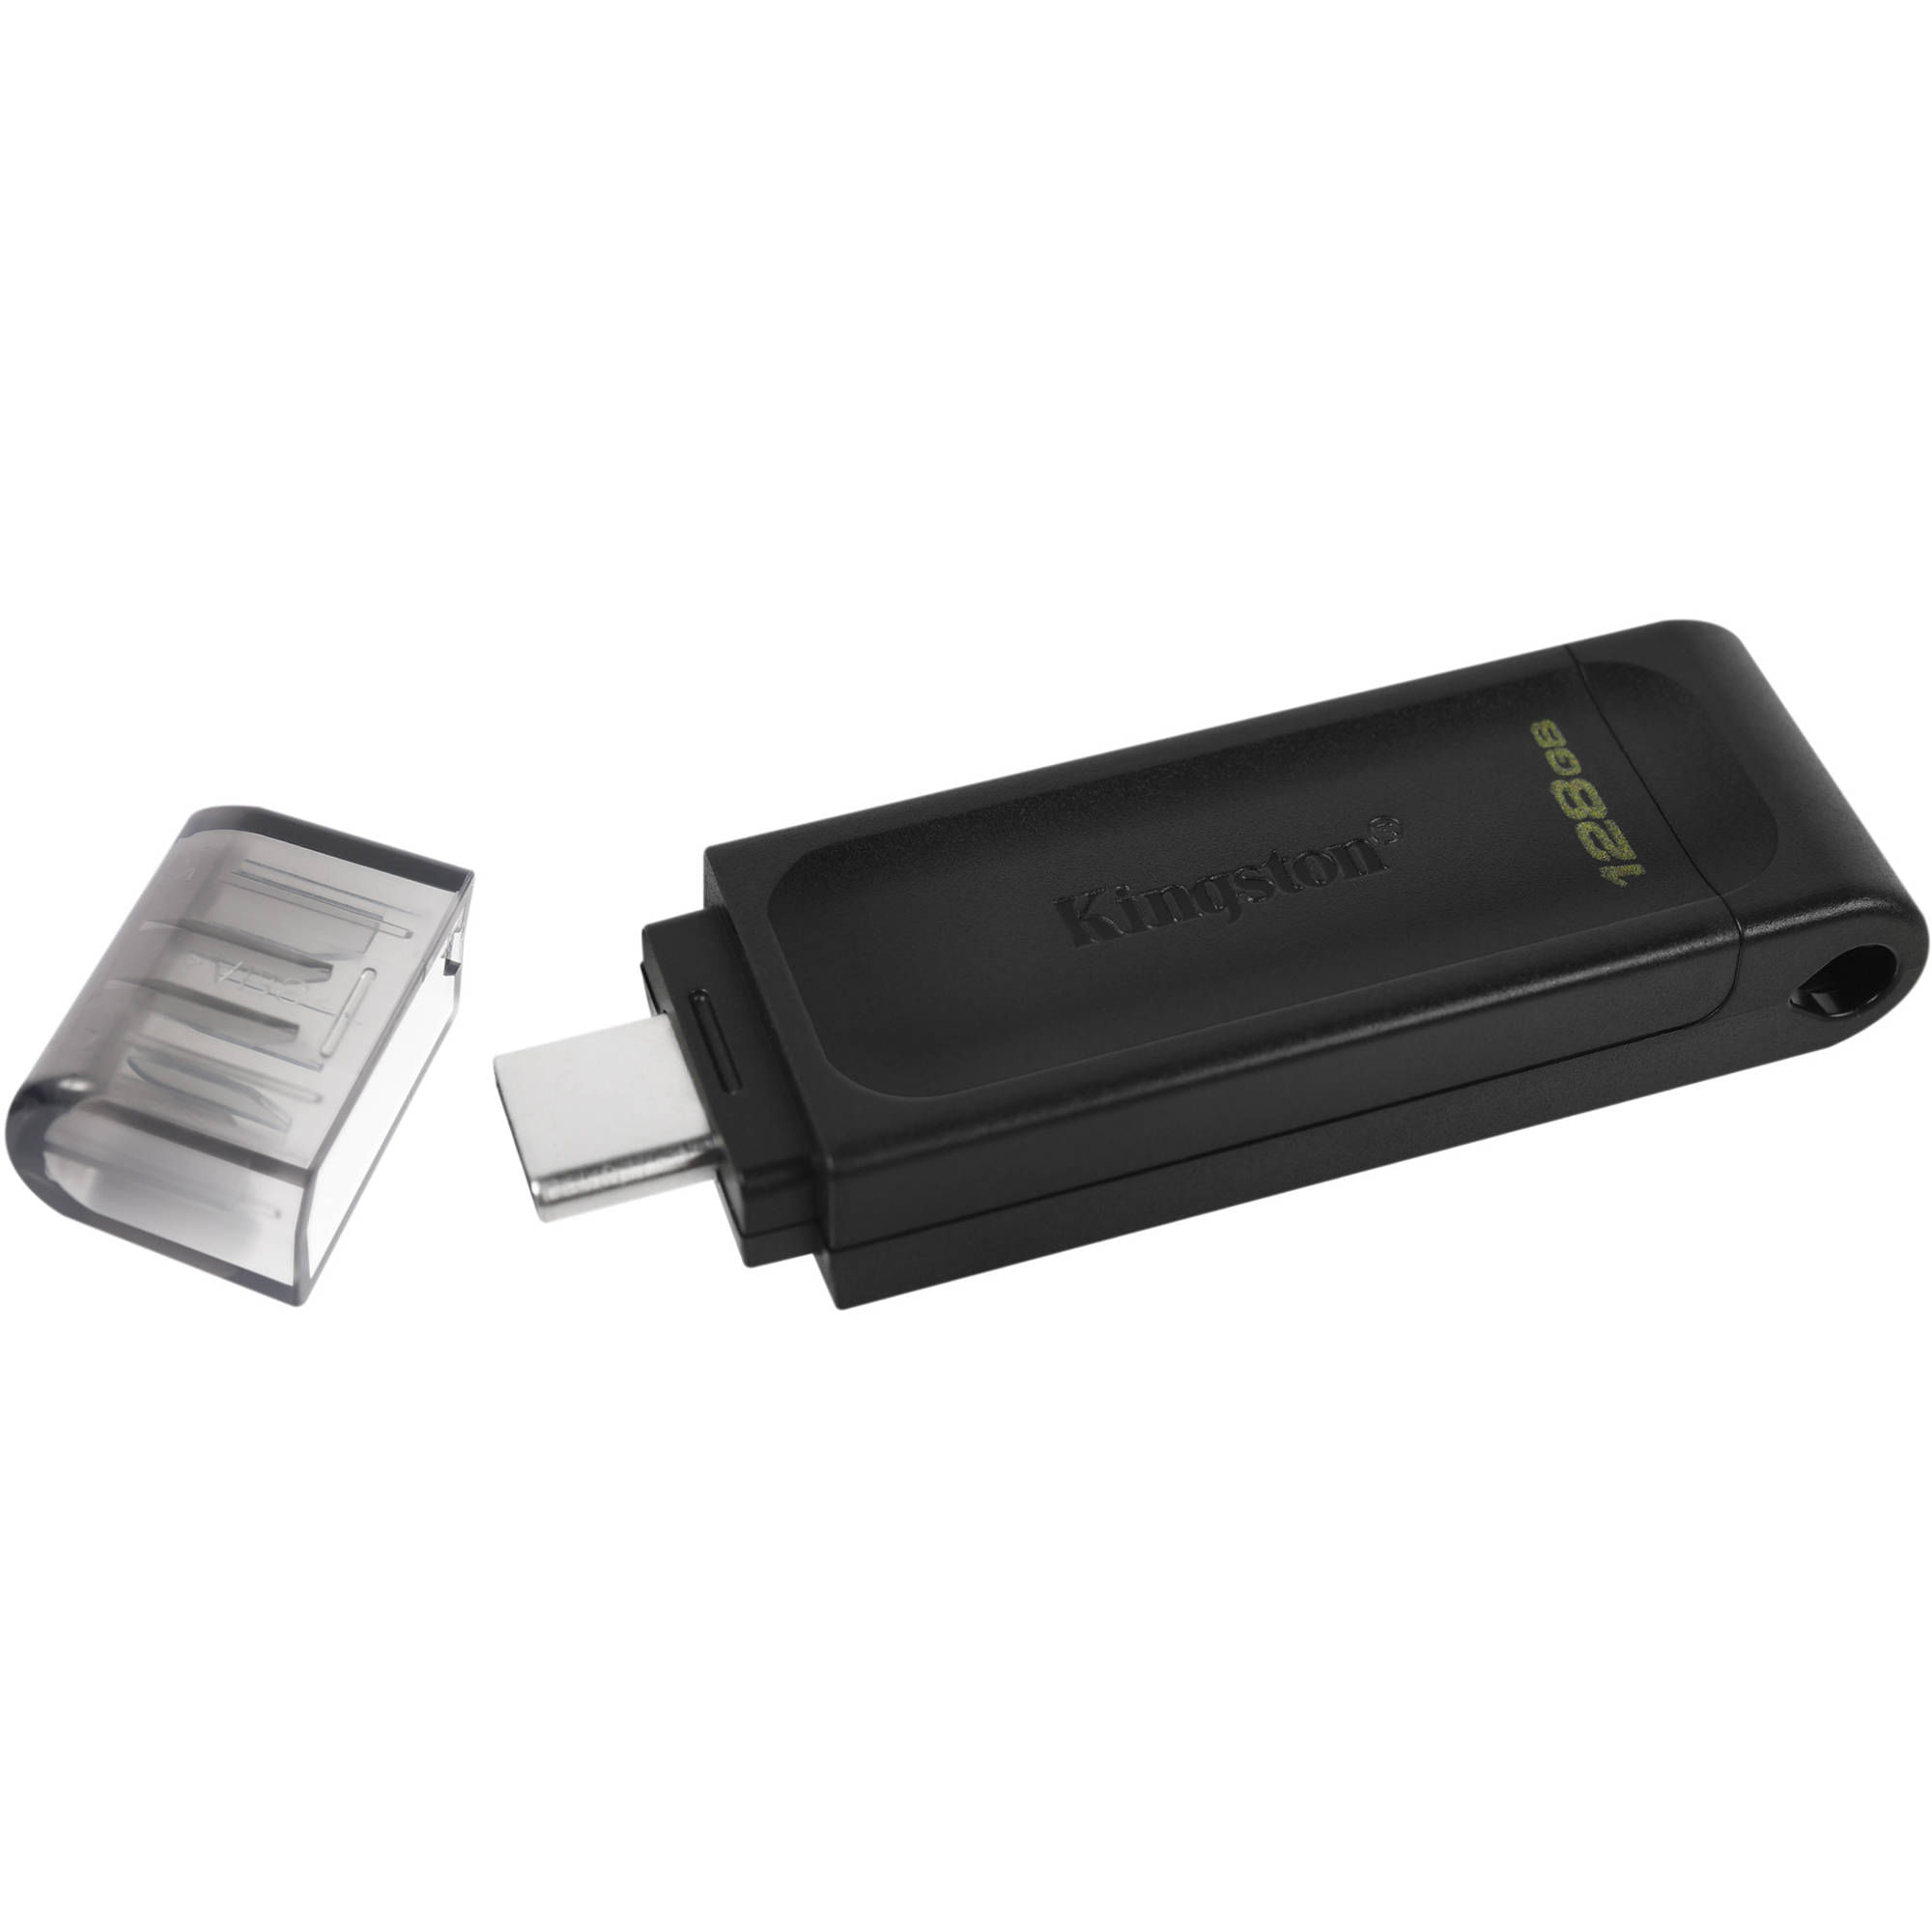 USB-C 3.2 Gen 1 Kingston 64GB DataTraveler 70 - DT70/64GB